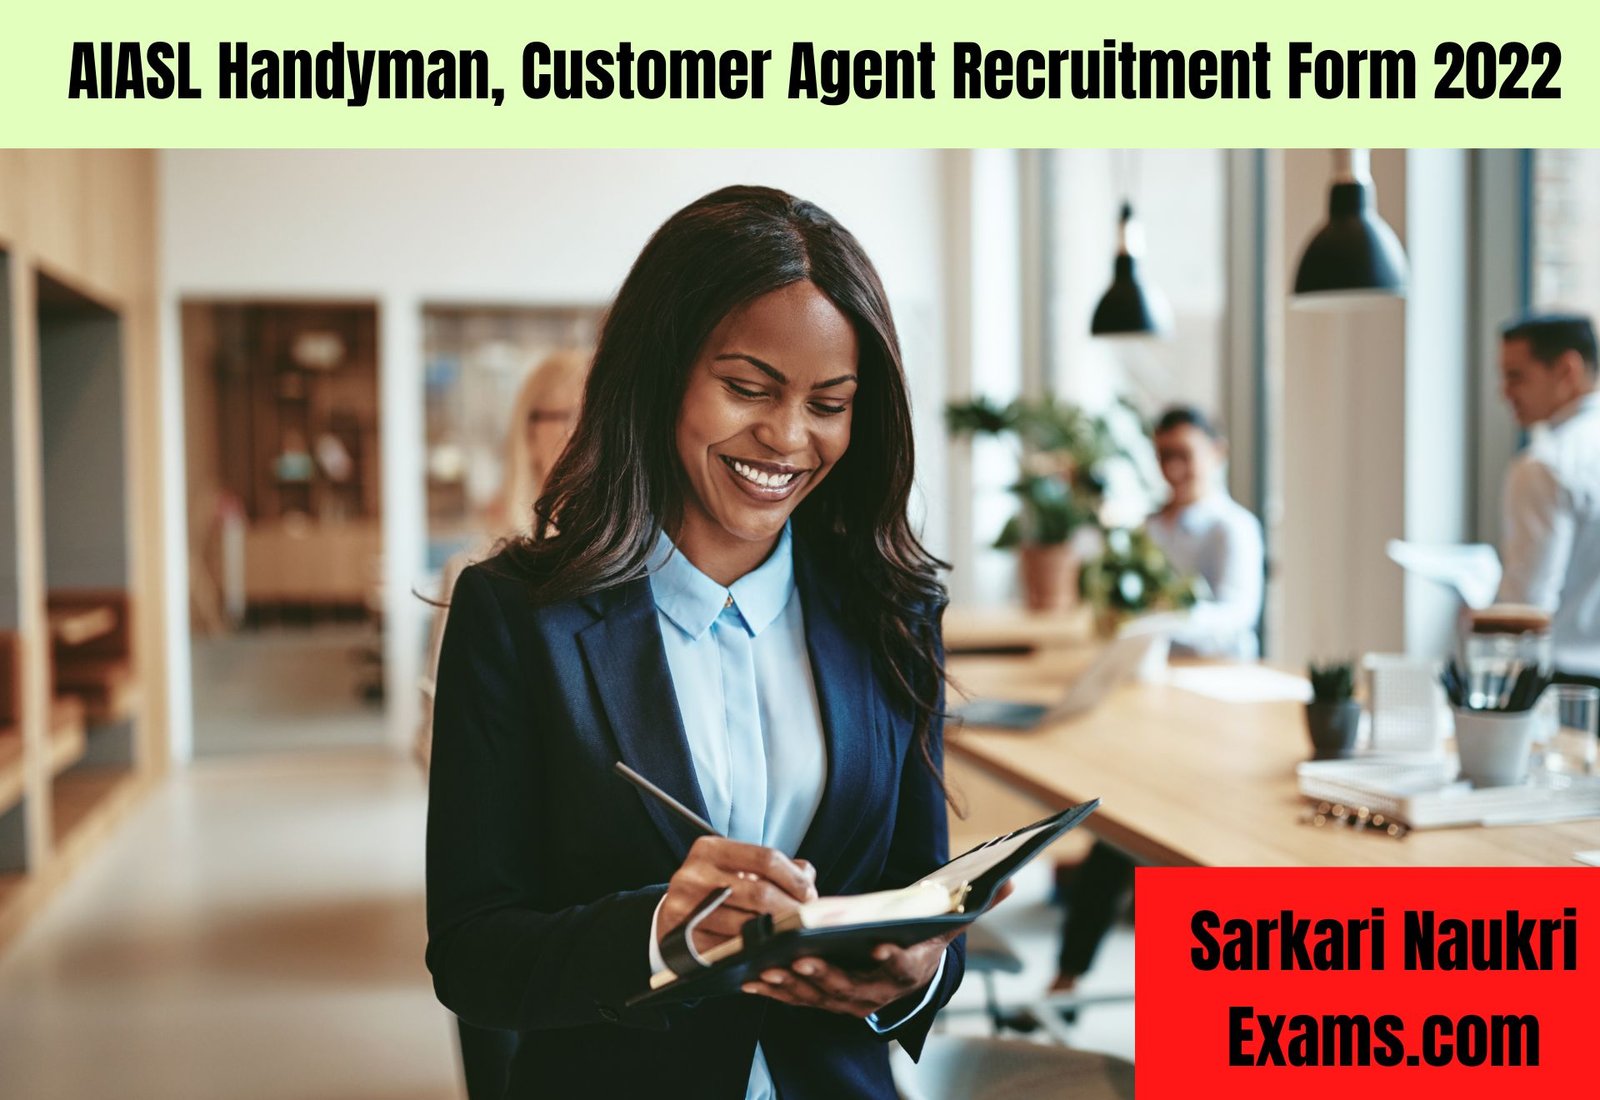 AIASL Handyman, Customer Agent Recruitment Form 2022 | Interview Based Job